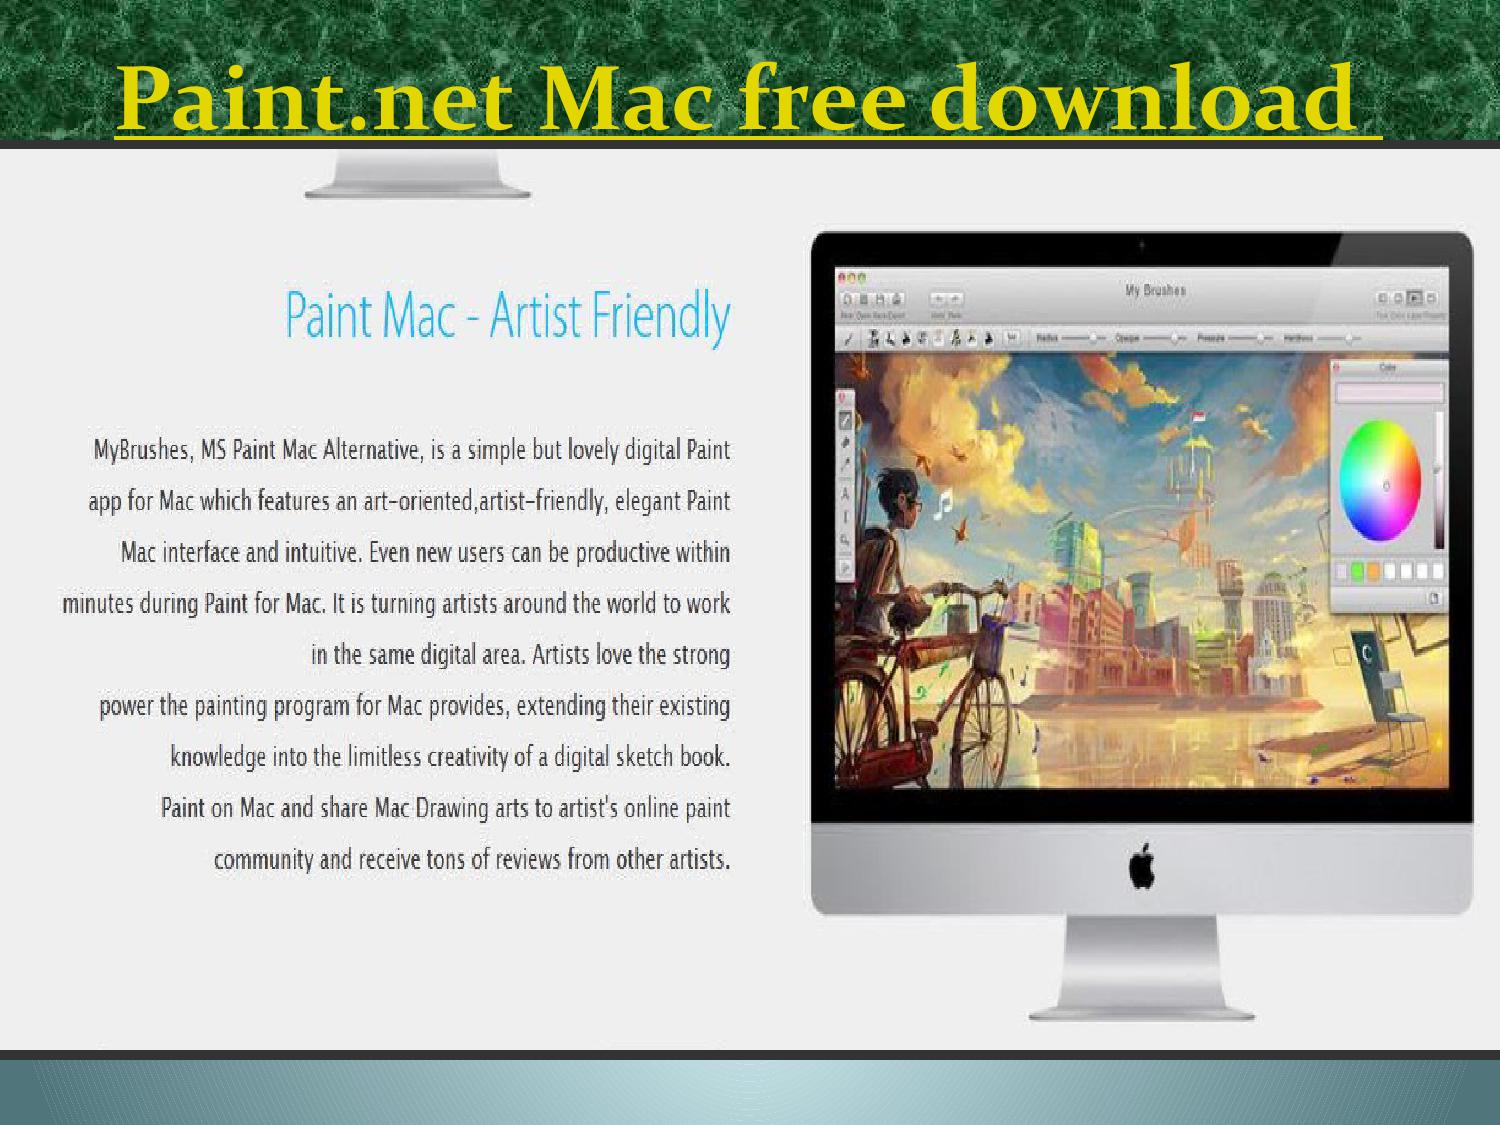 paint.net for mac